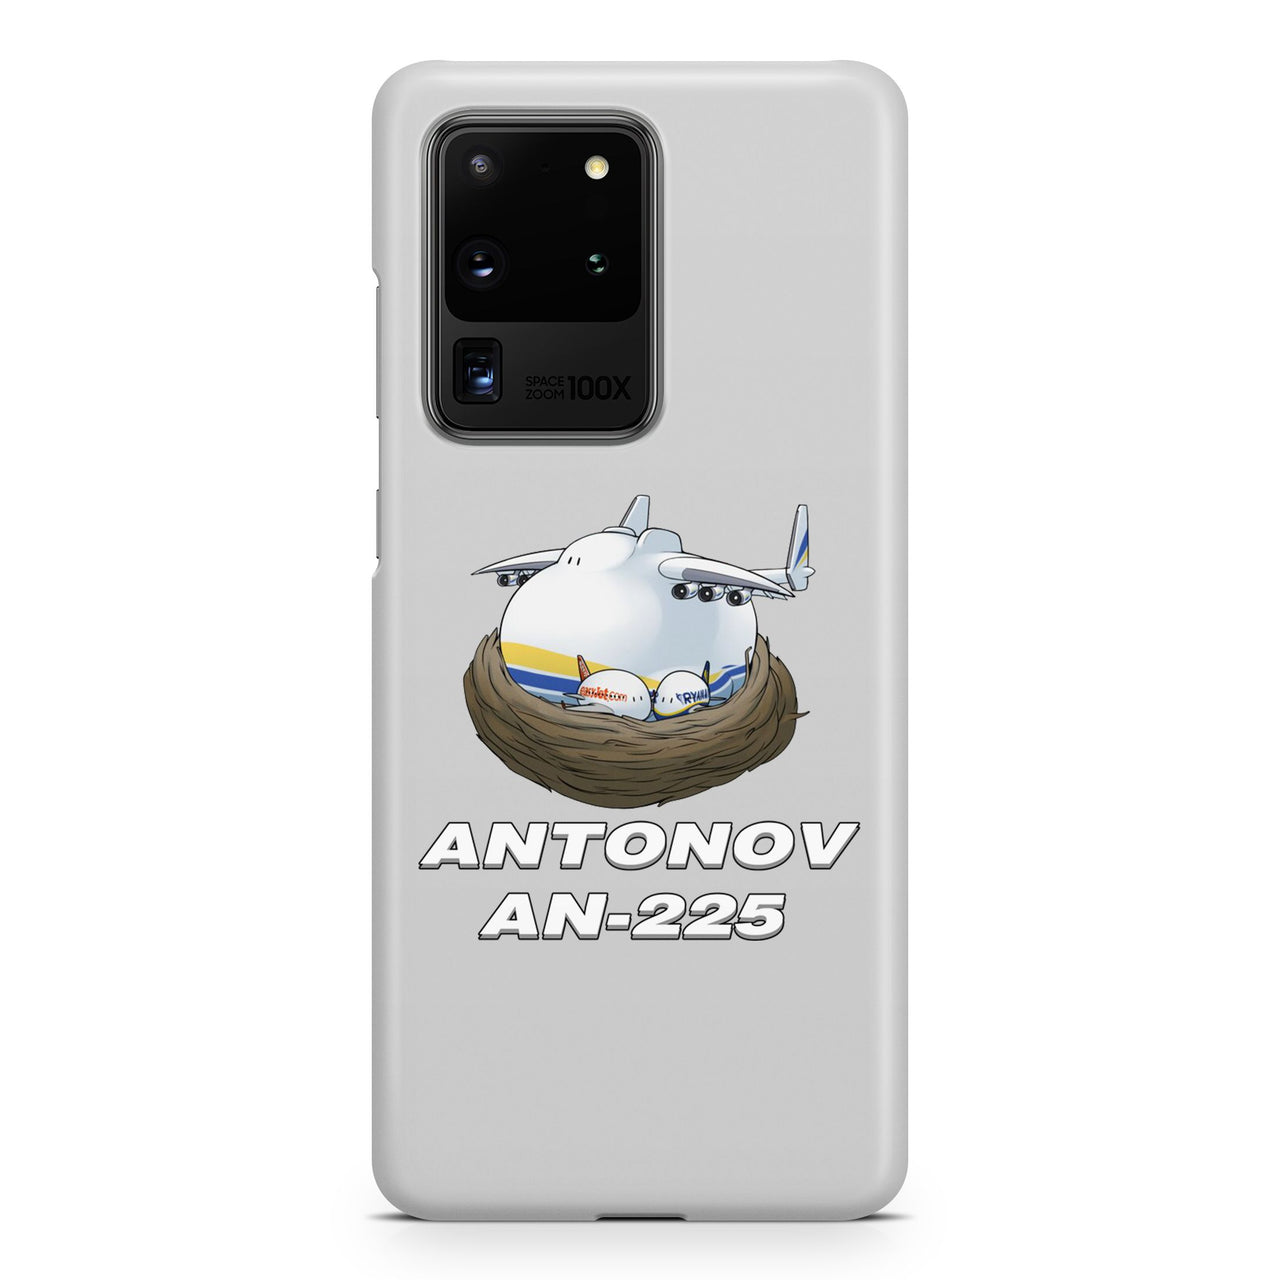 Antonov AN-225 (22) Samsung S & Note Cases